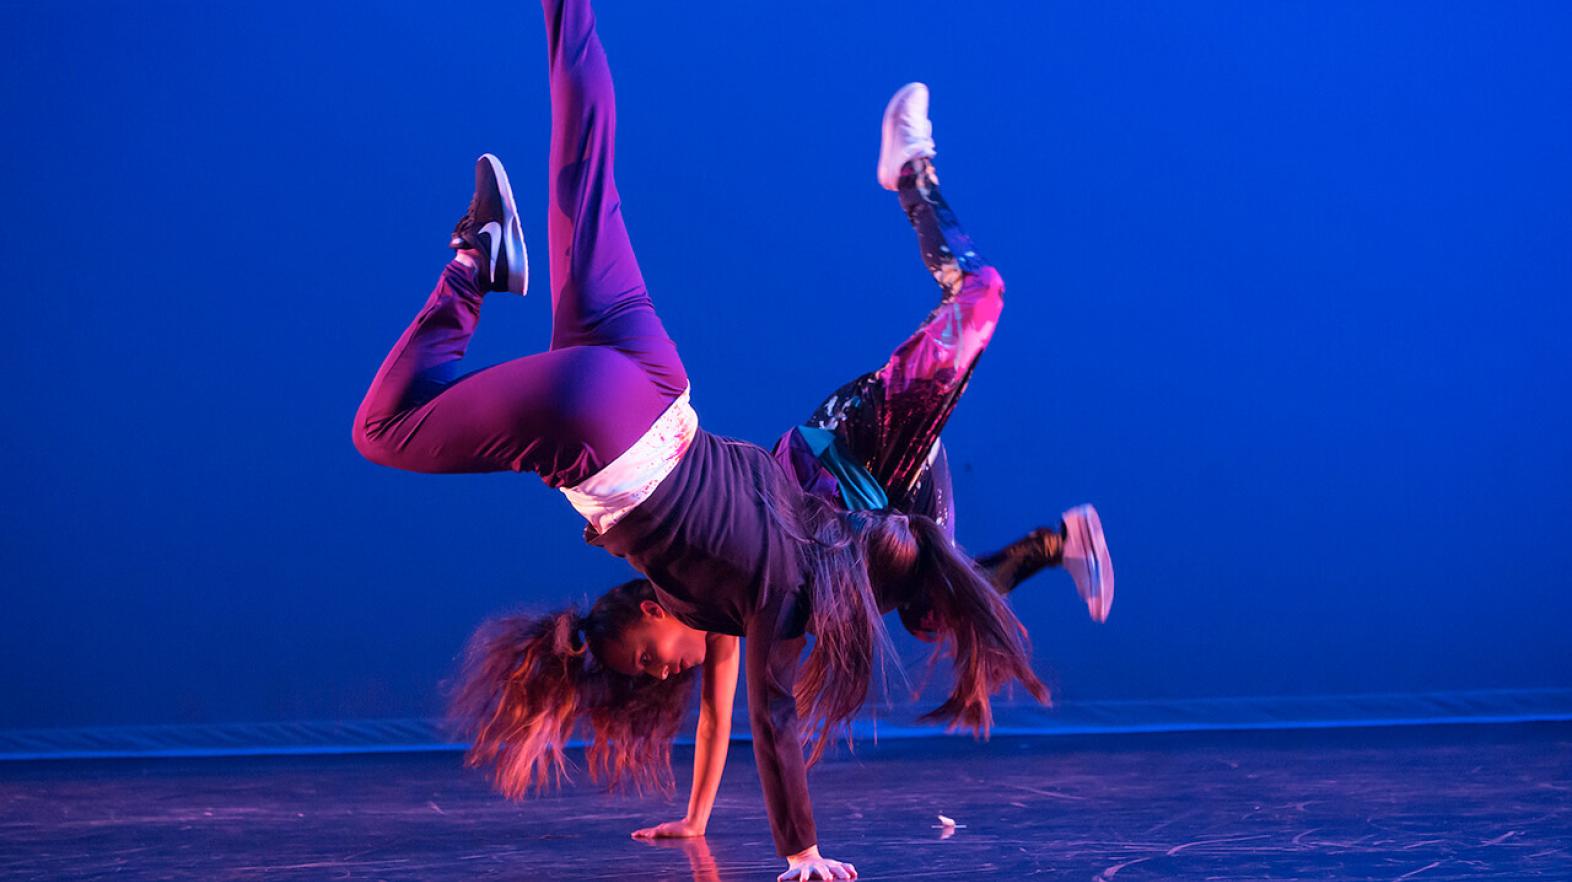 Two dancers perform a hip hop routine